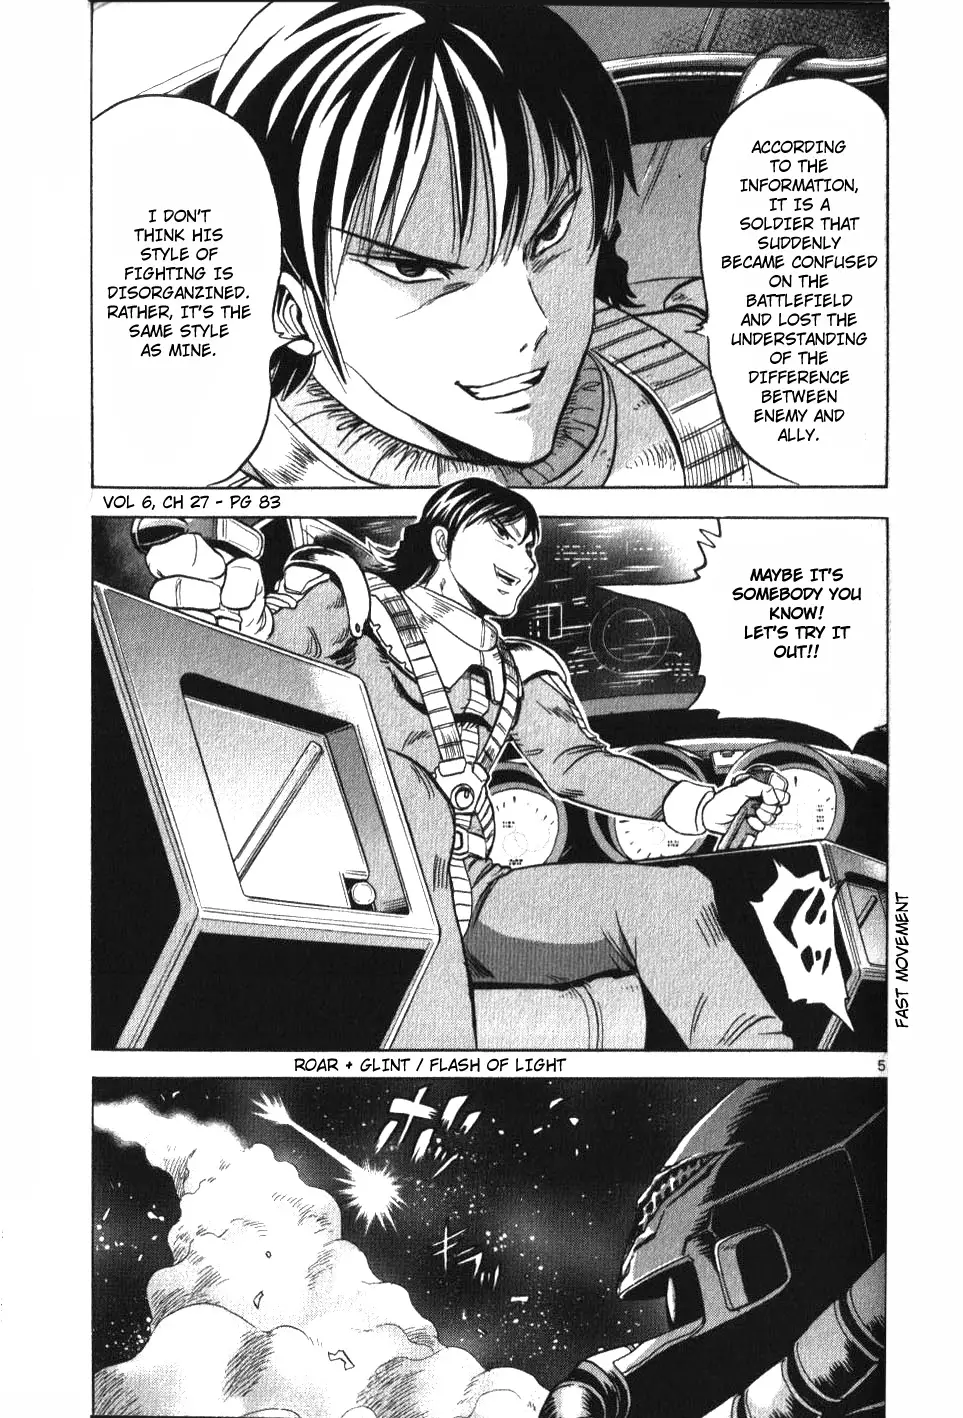 Mobile Suit Gundam Aggressor - 27 page 5-76101a8c